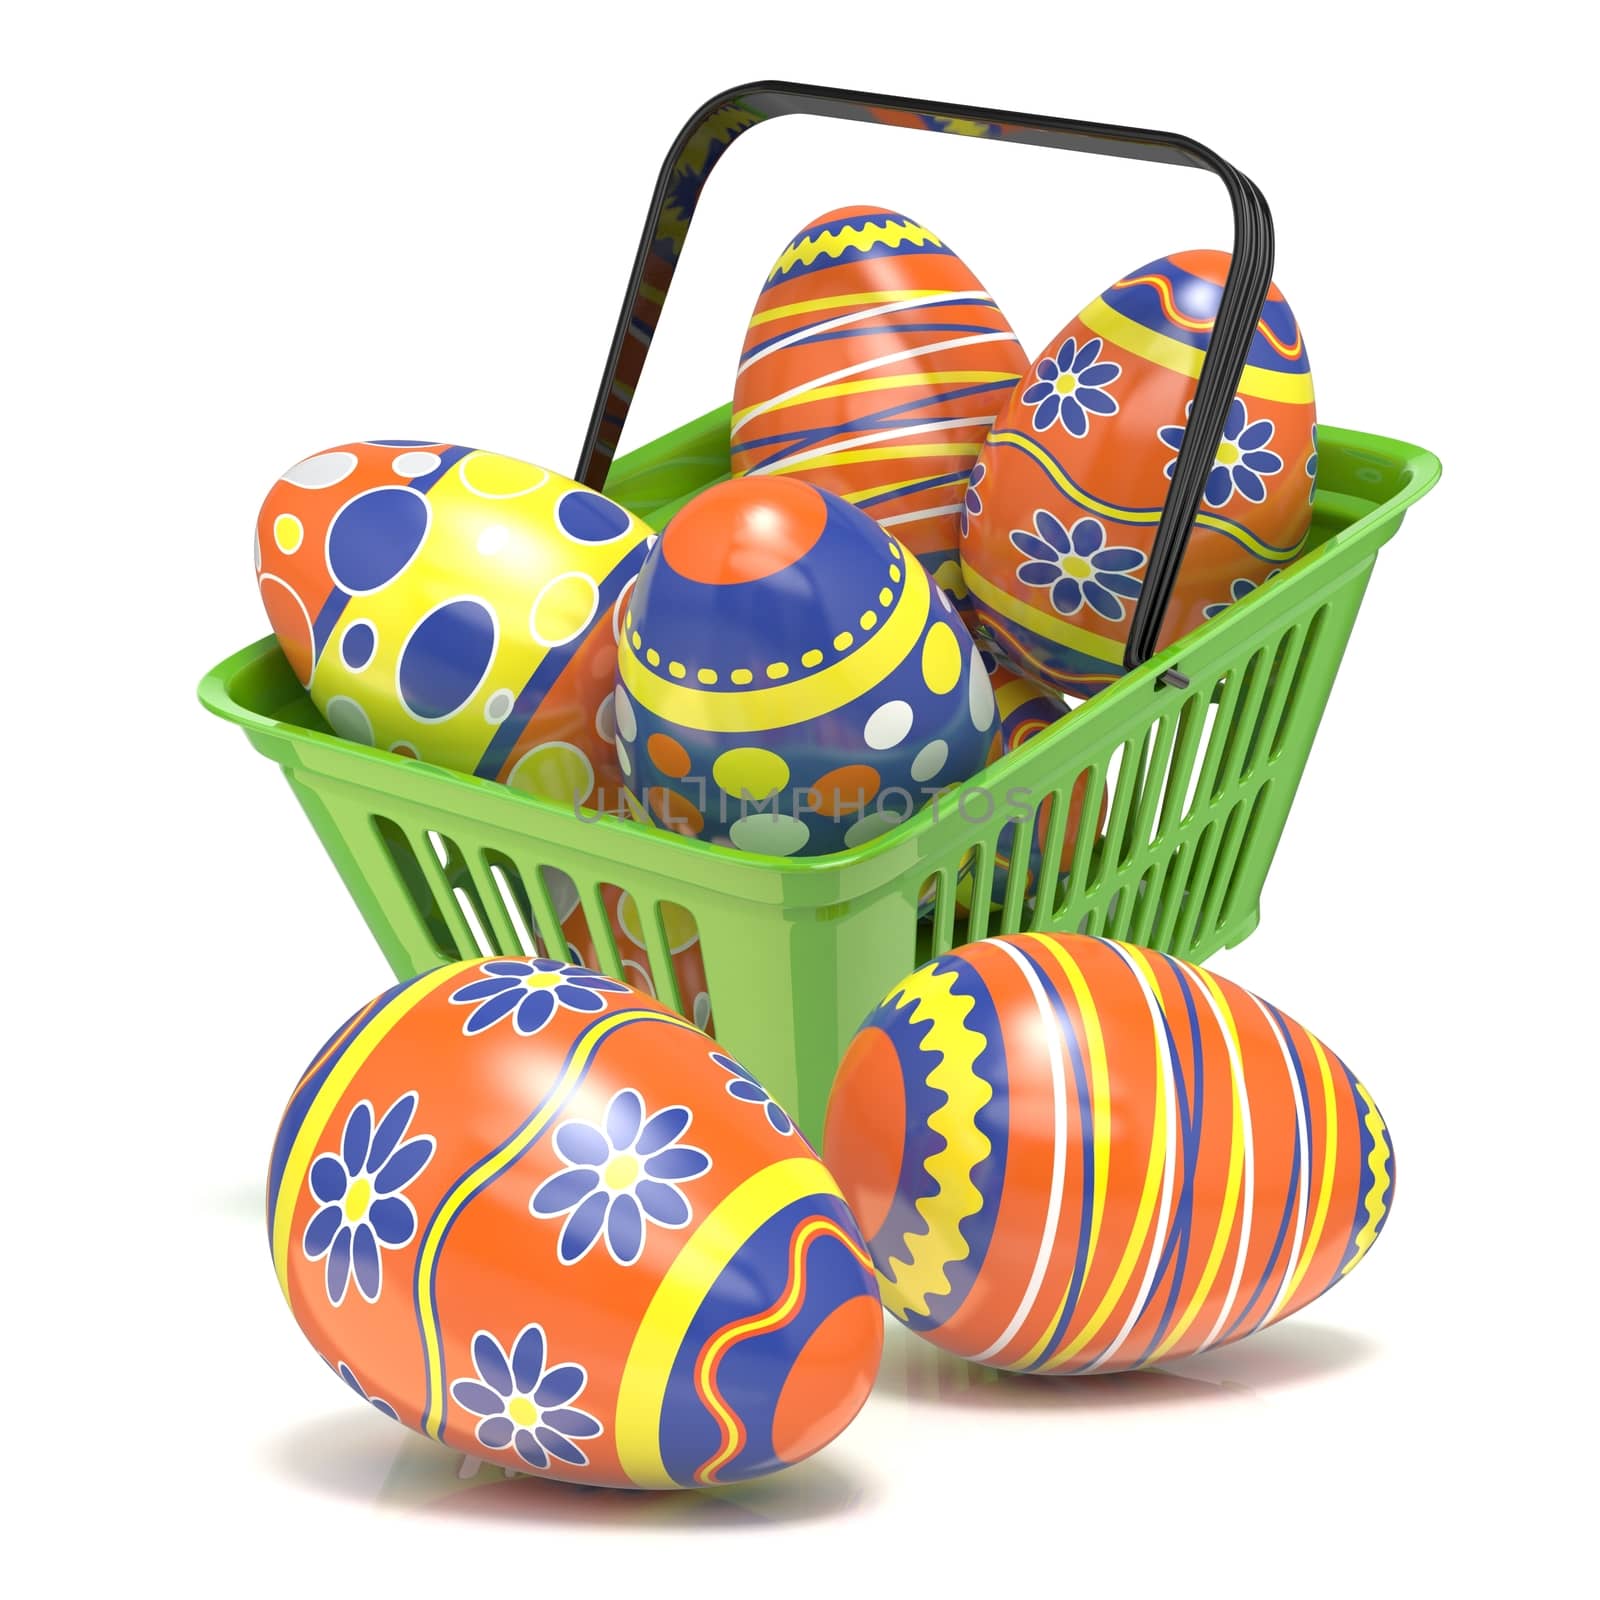 Easter eggs in green shopping basket. 3D render illustration isolated on white background